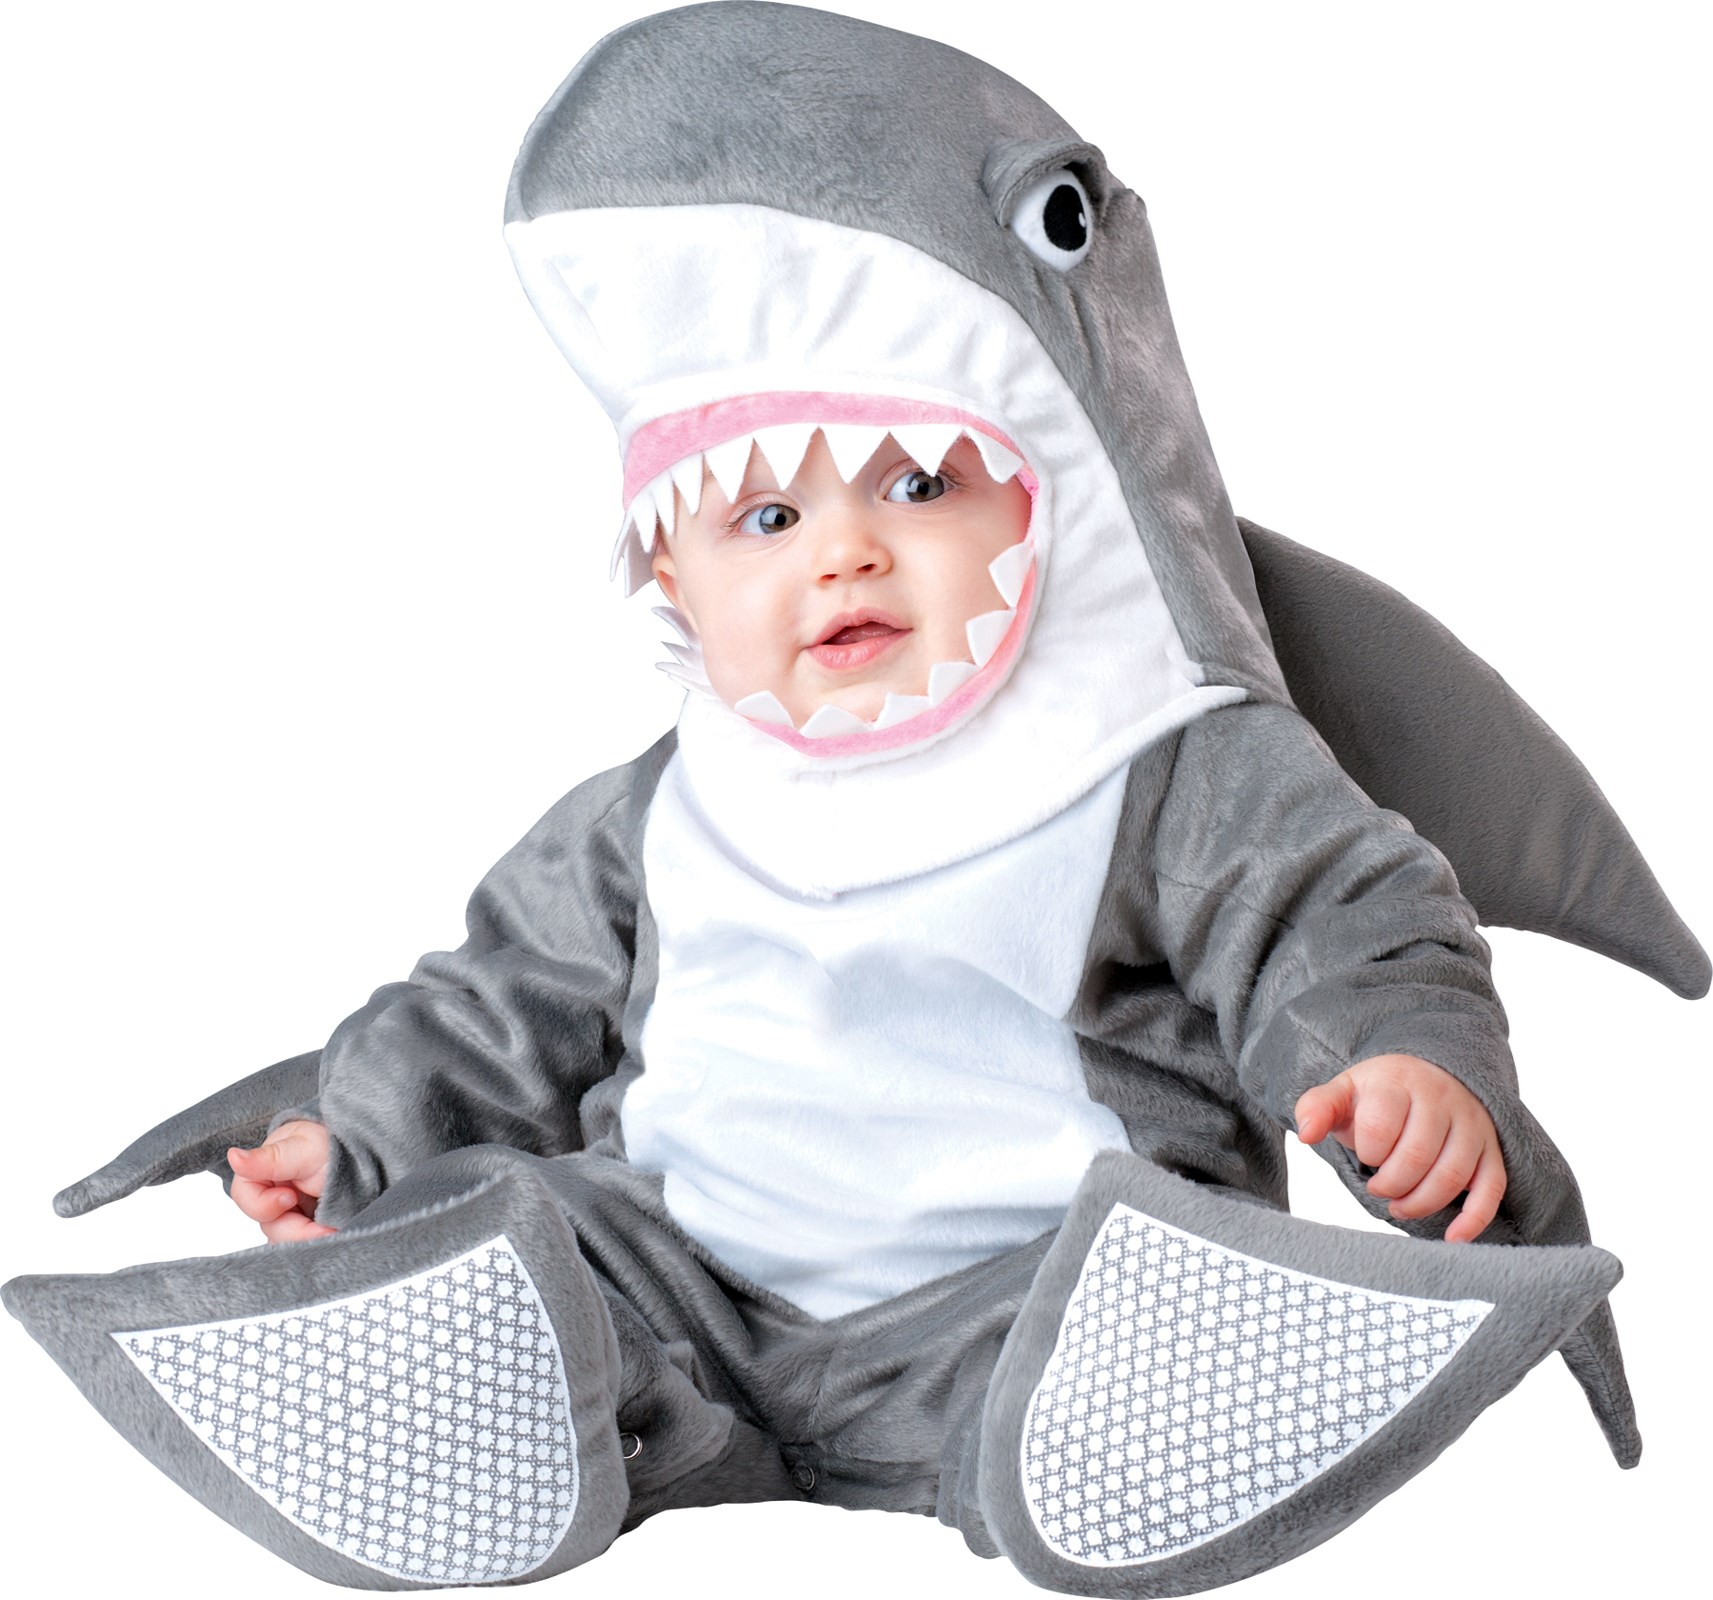 Silly Shark Infant / Toddler Costume